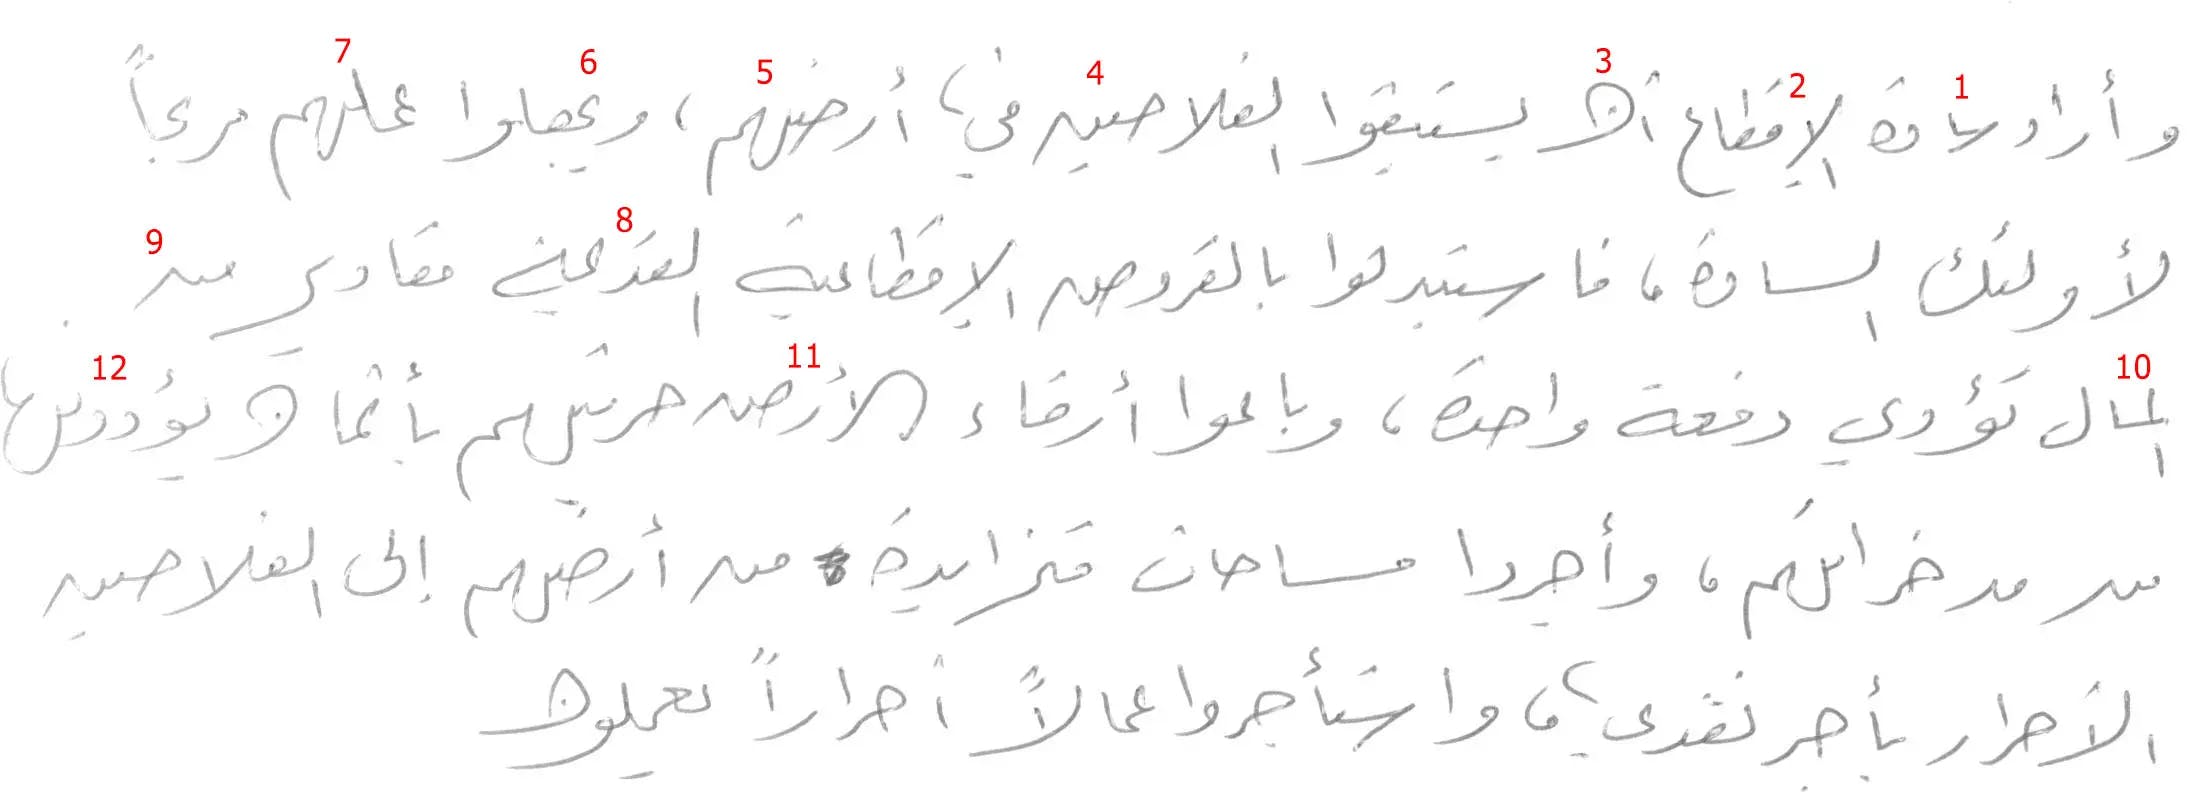 arabic-handwriting-05